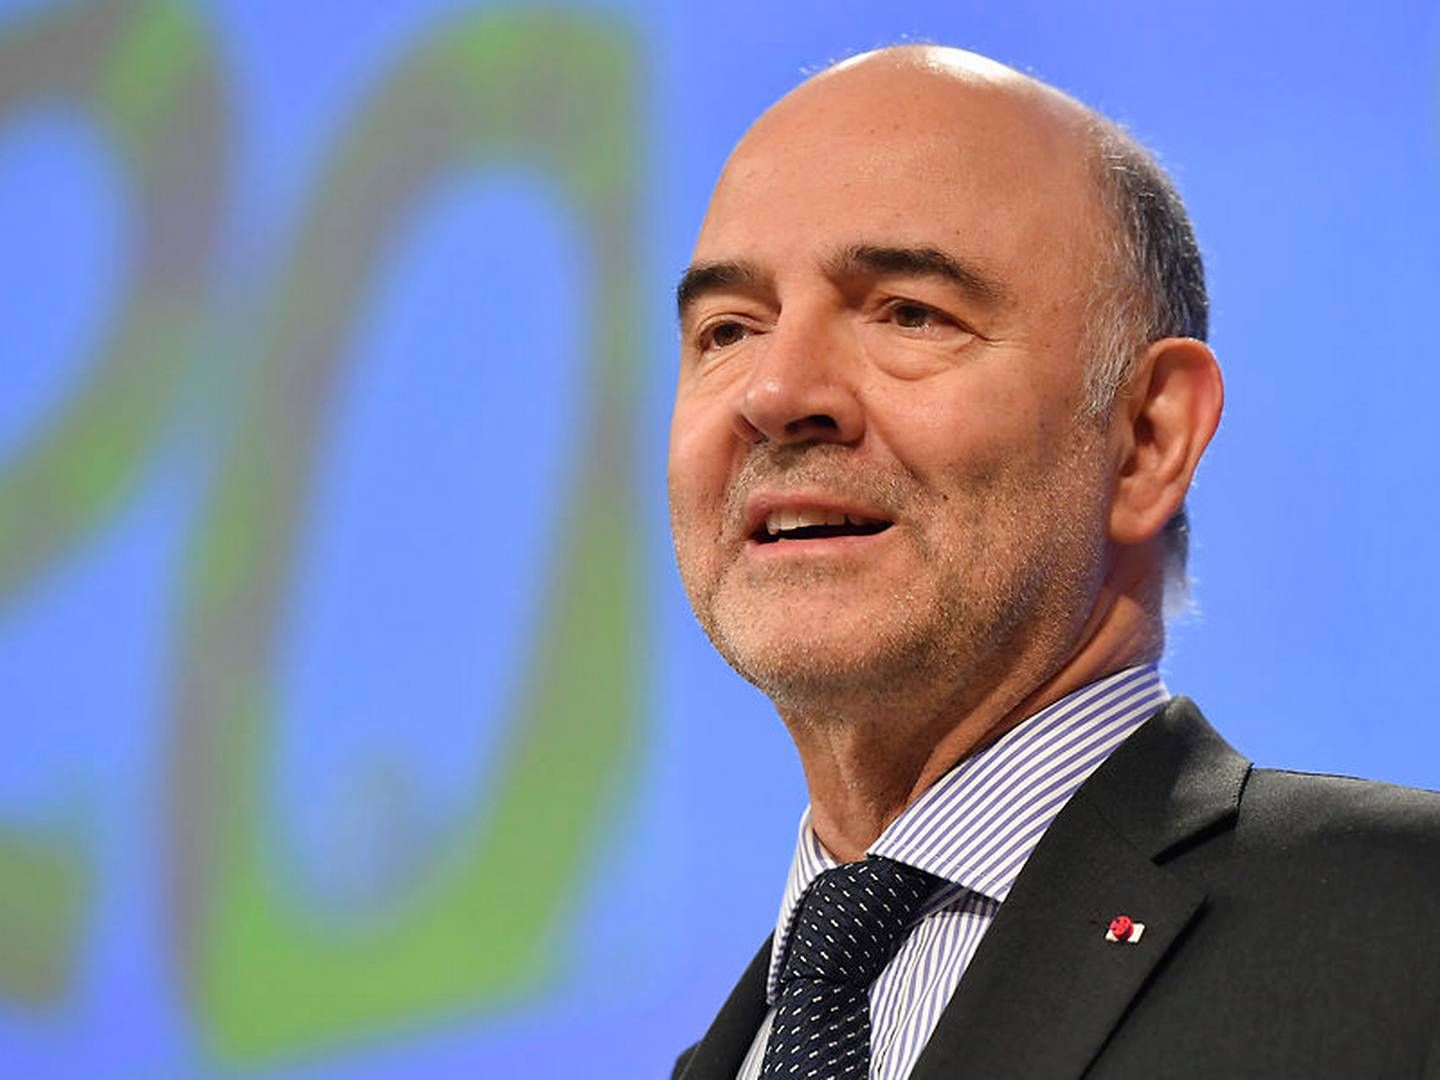 EU's finans- og økonomikommissær Pierre Moscovici. | Foto: Ritzau Scanpix/AP/Geert Vanden Wijngaert